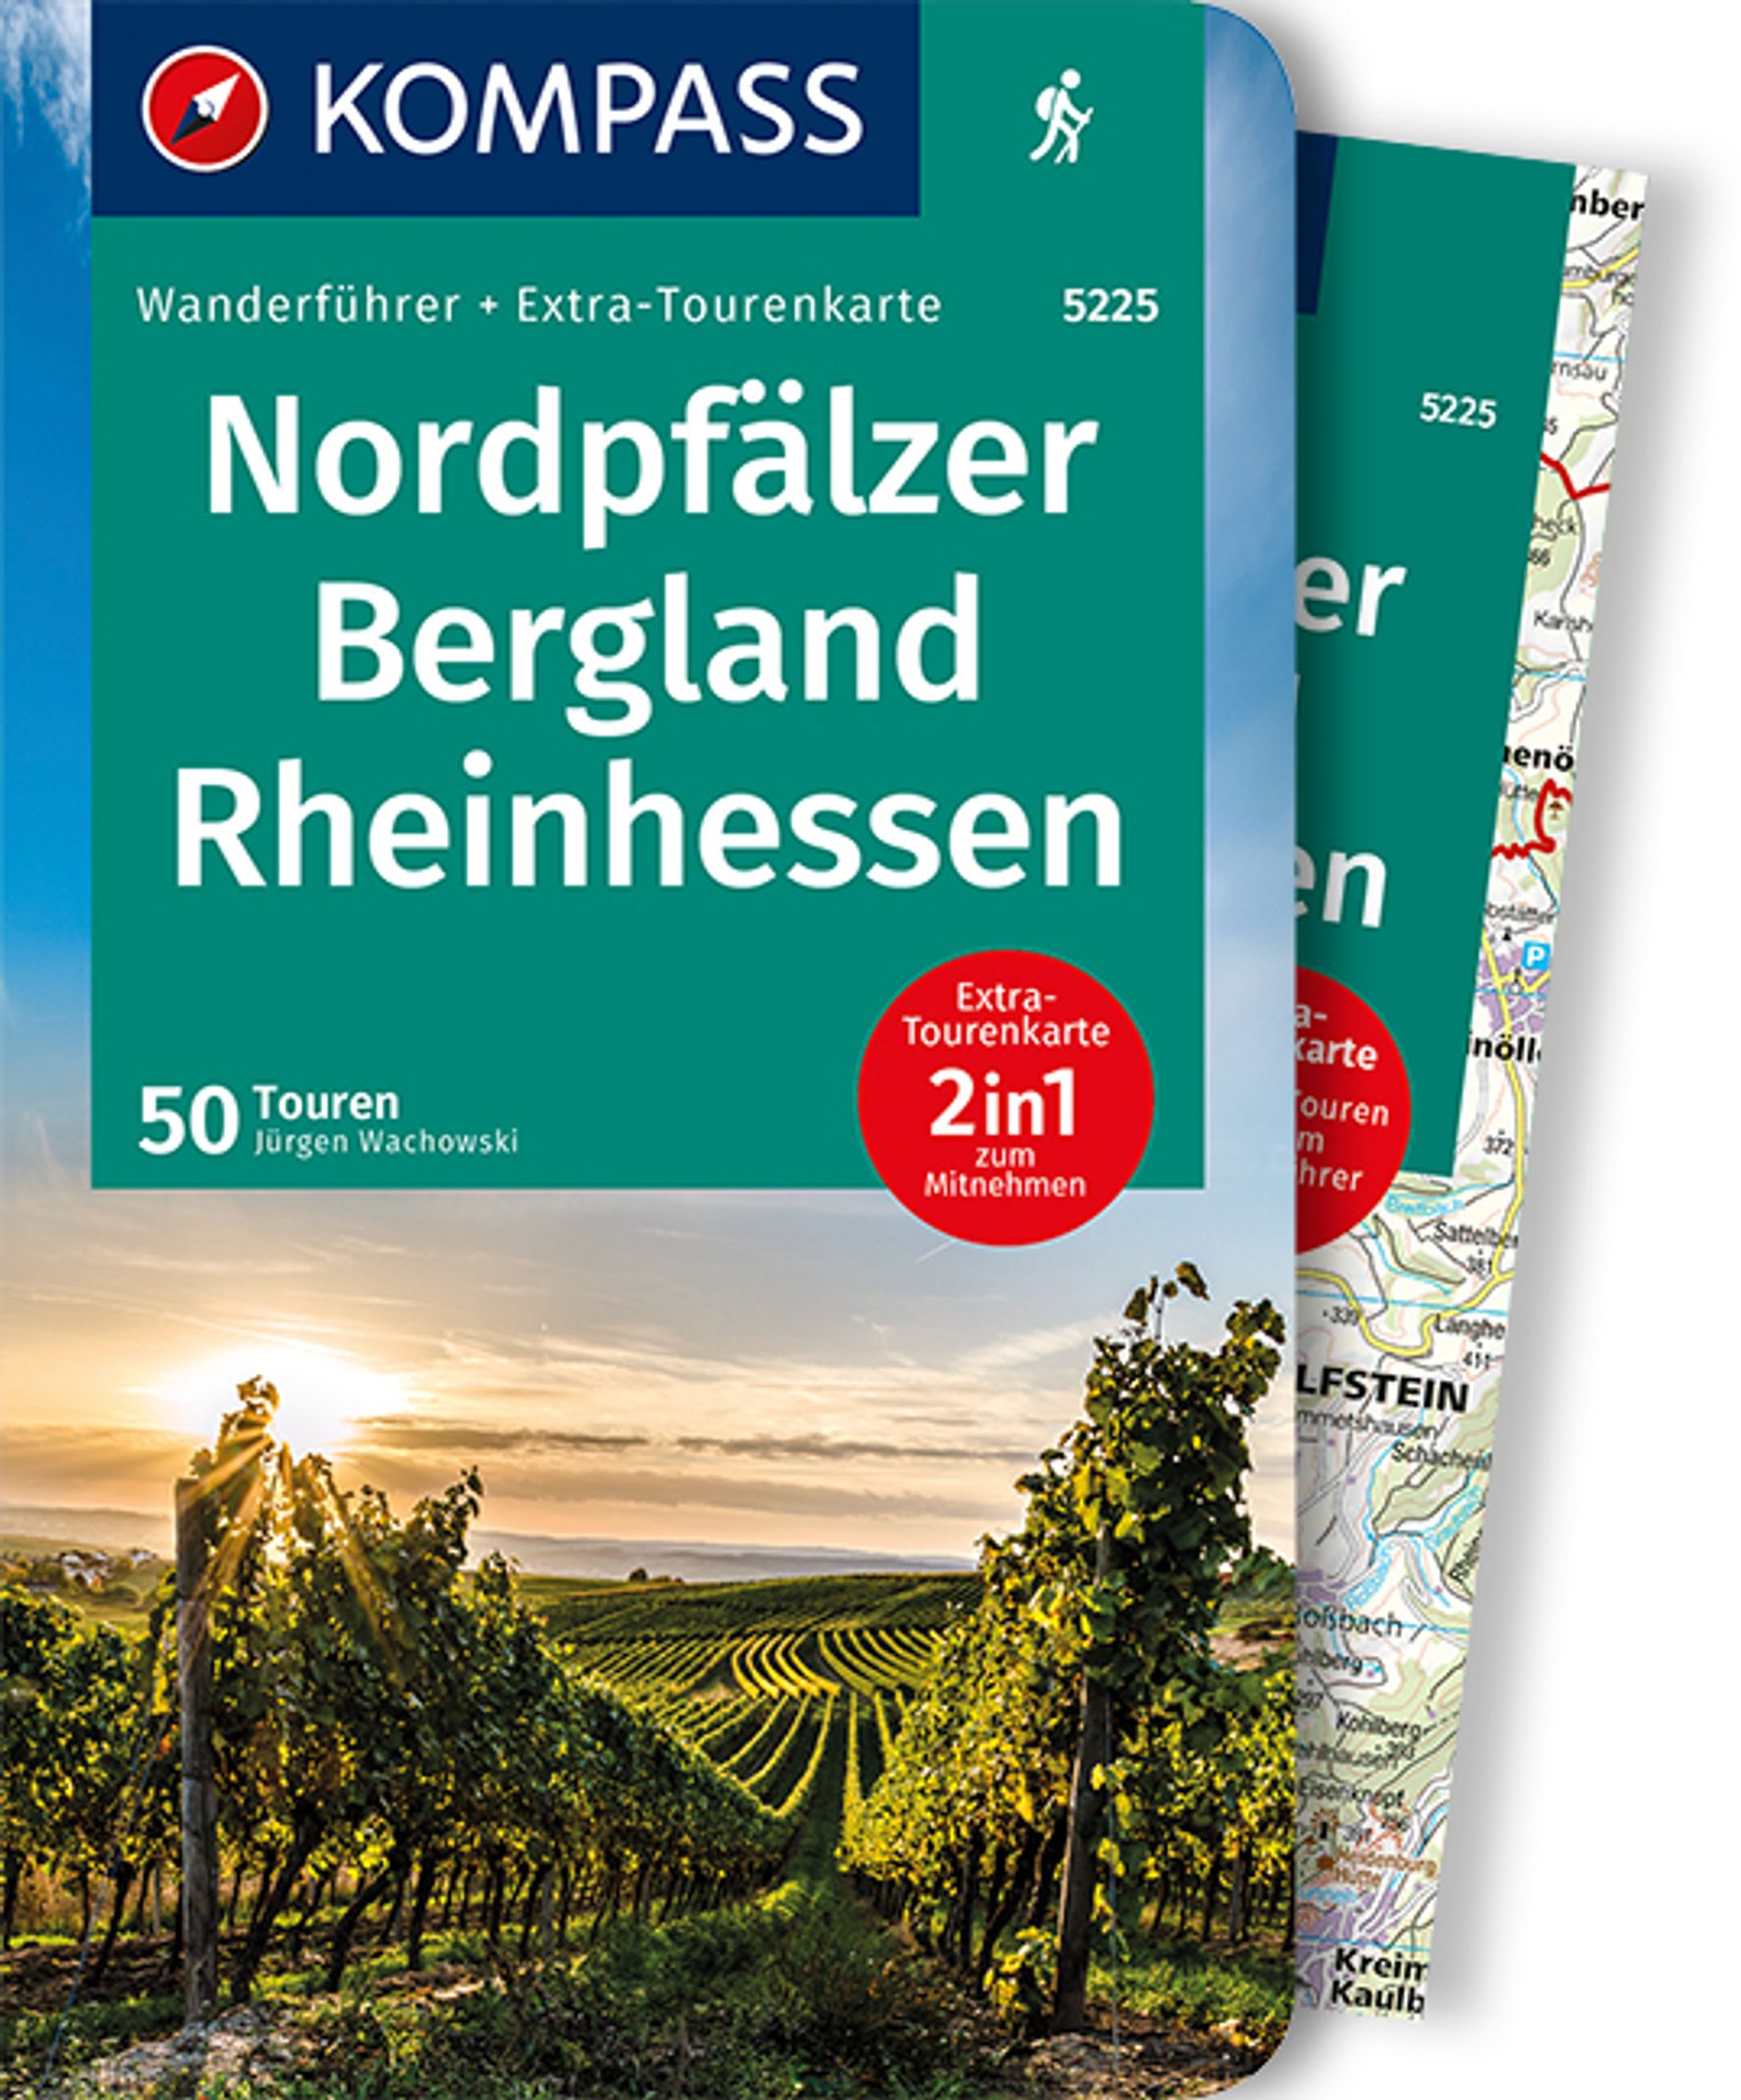 MAIRDUMONT Nordpfälzer Bergland, Rheinhessen, 50 Touren mit Extra-Tourenkarte